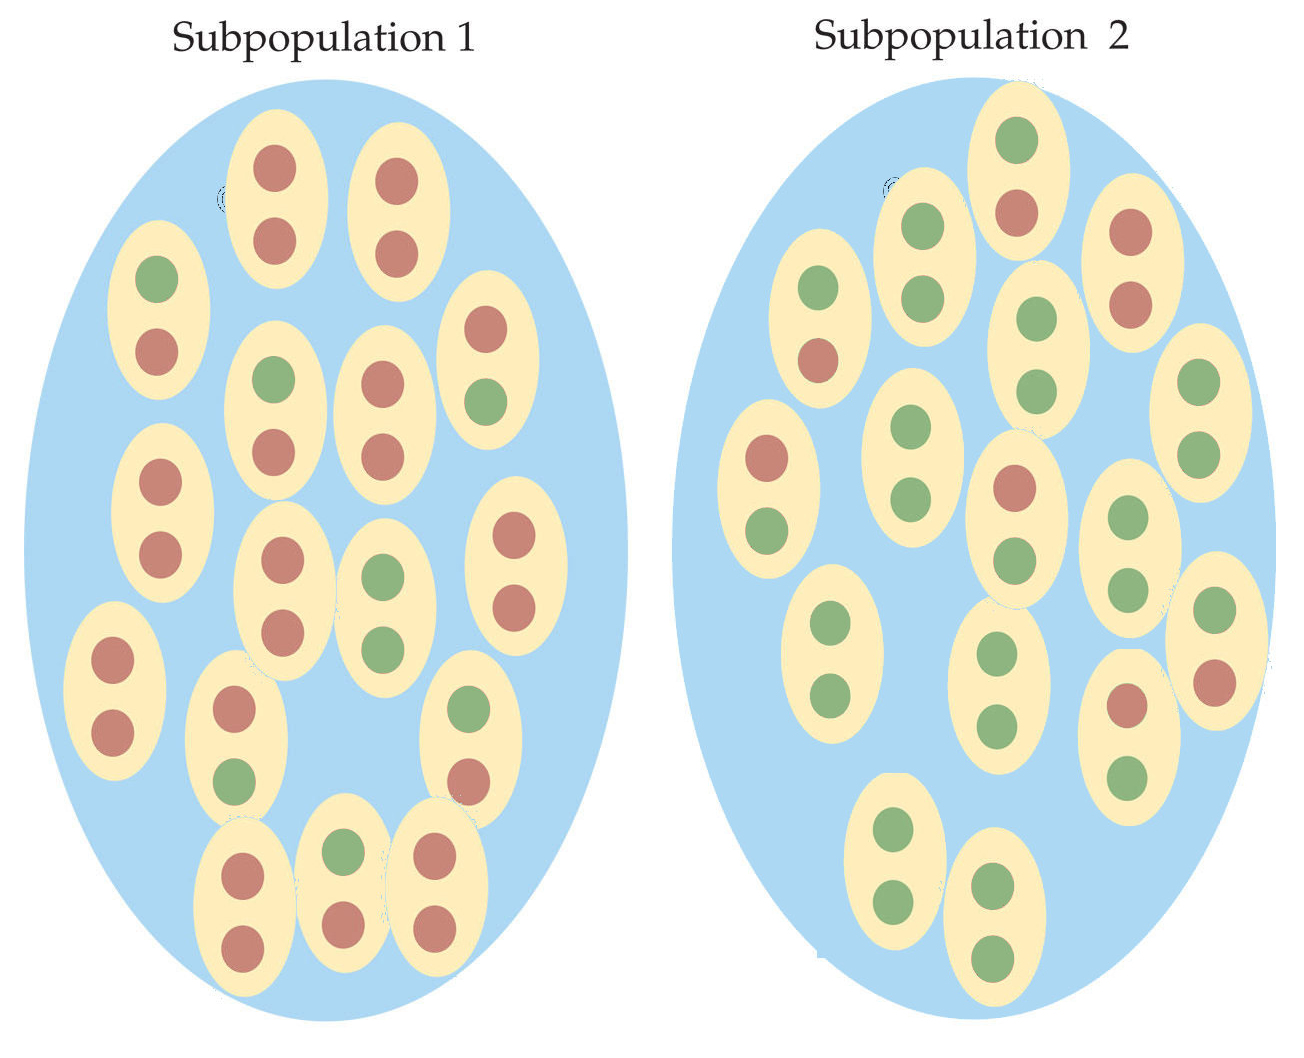 Subpopulations